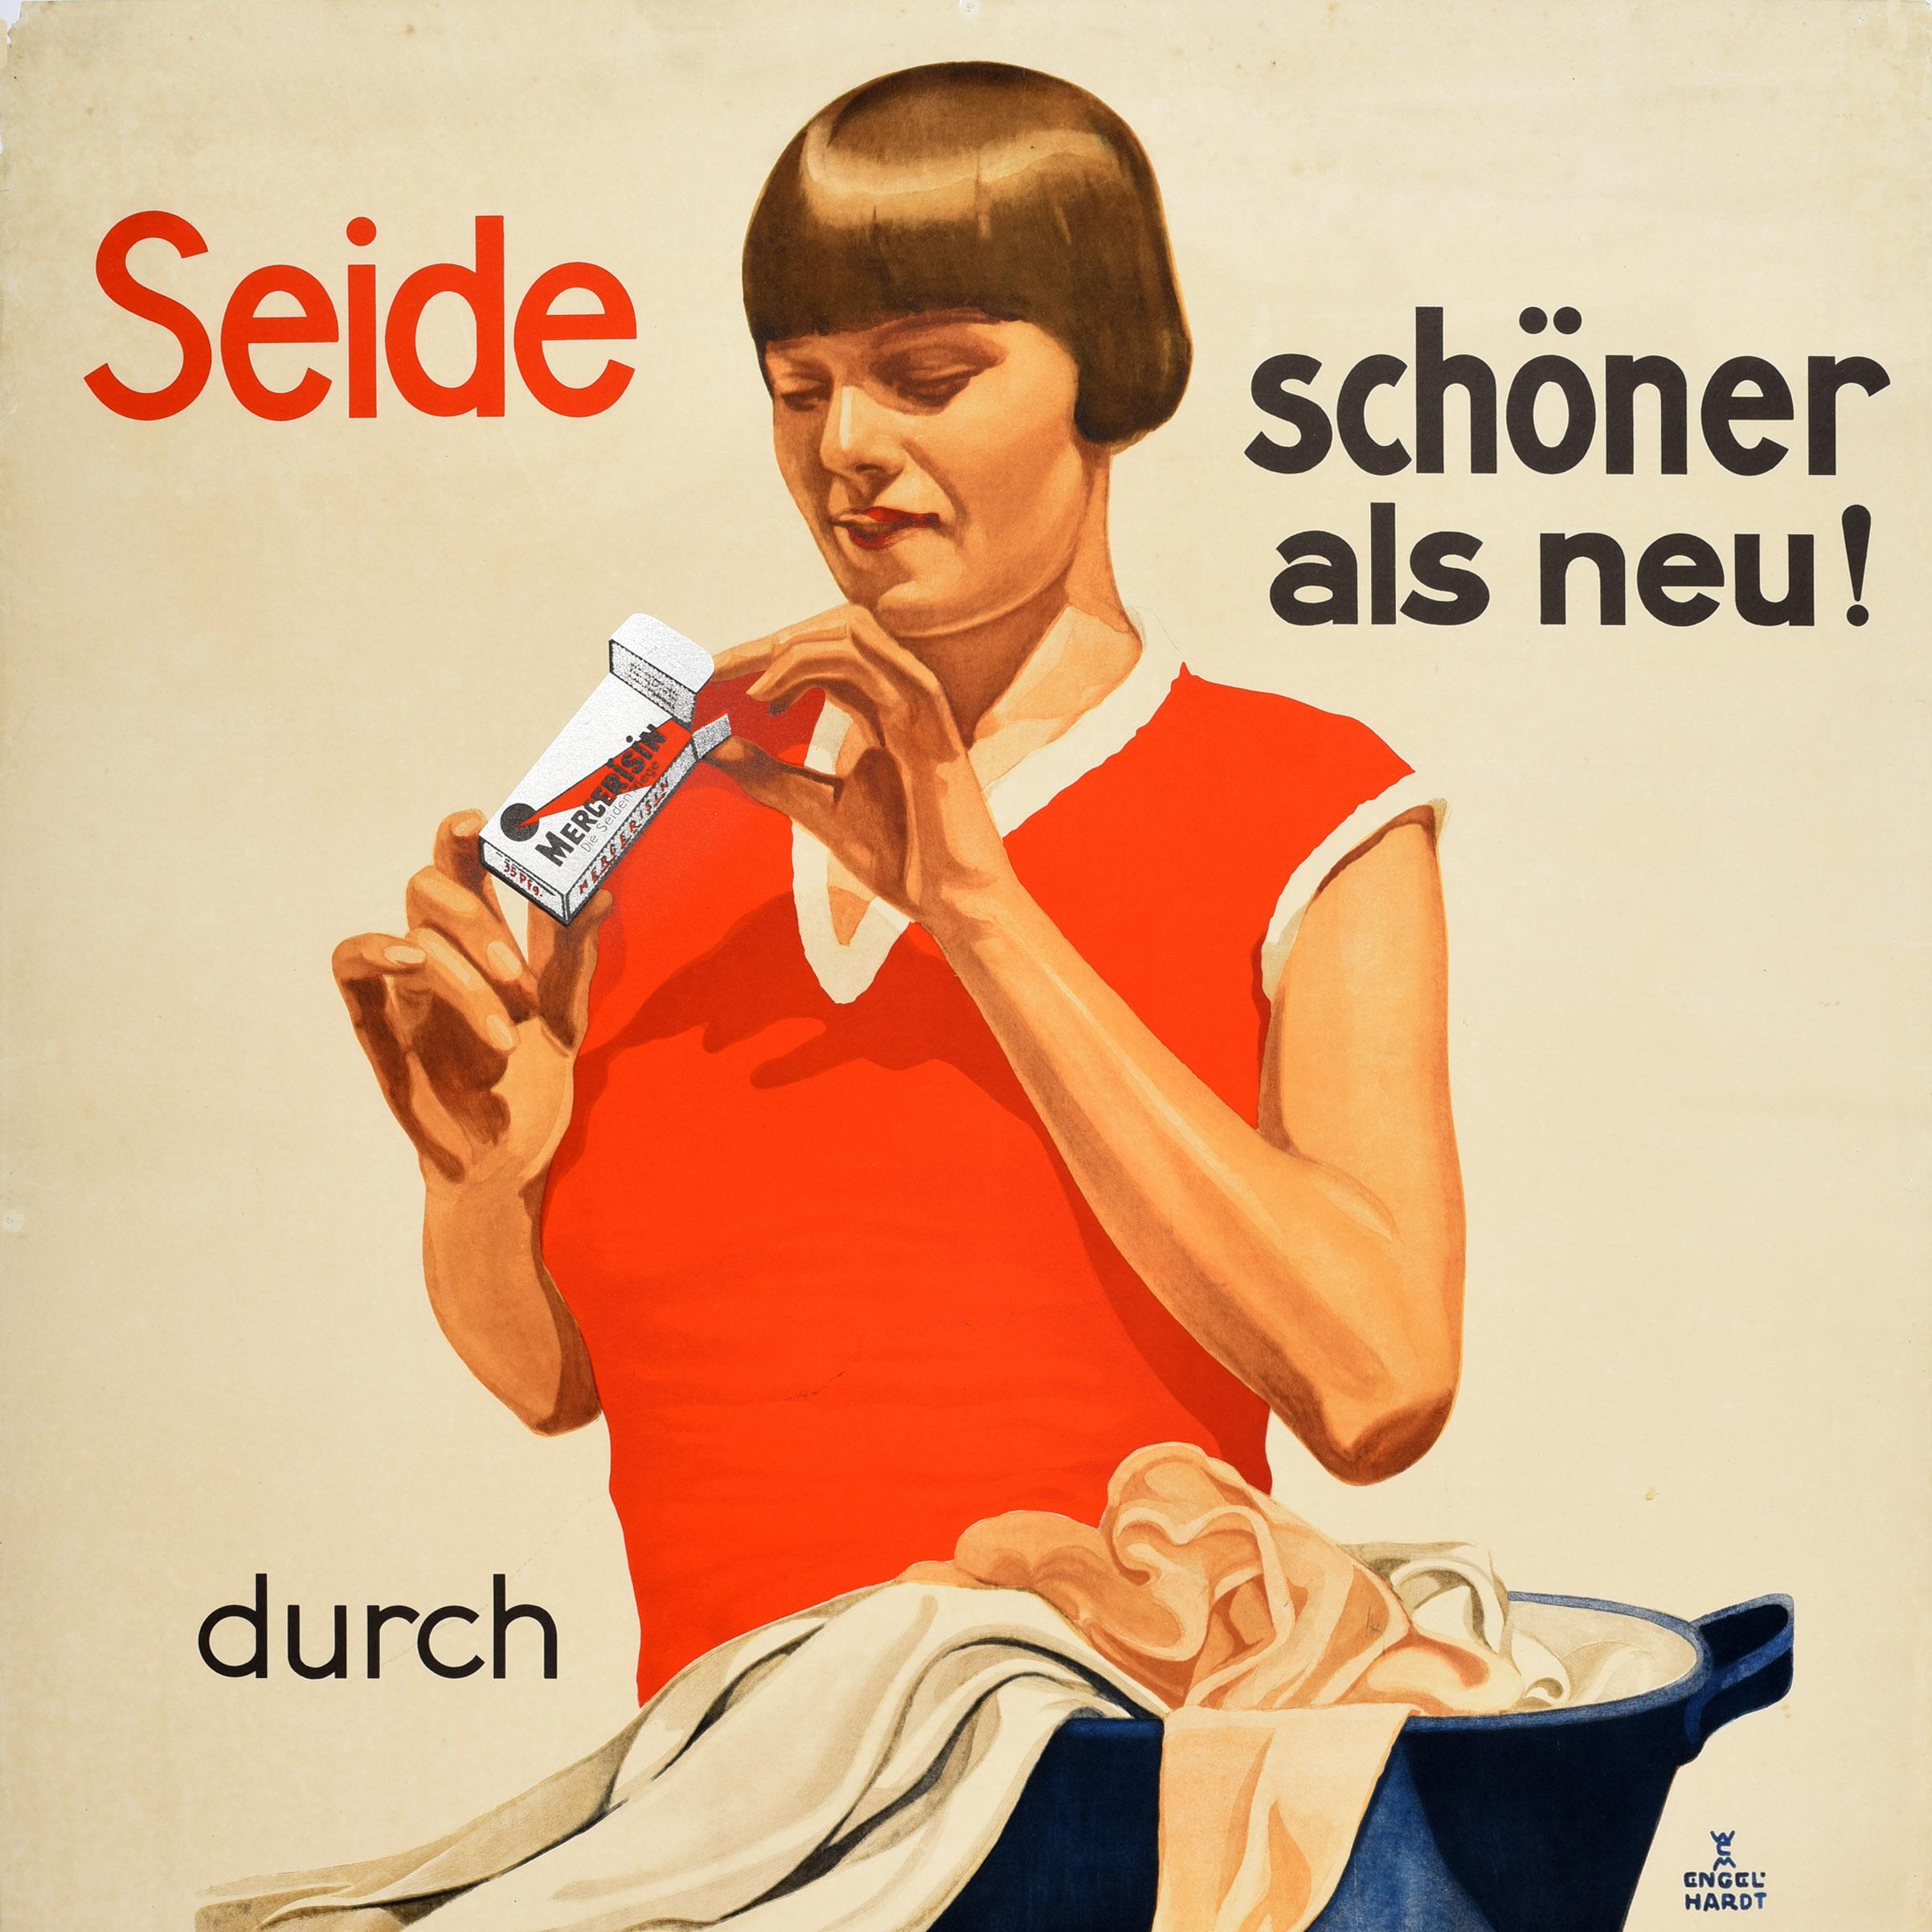 soap advertisement poster